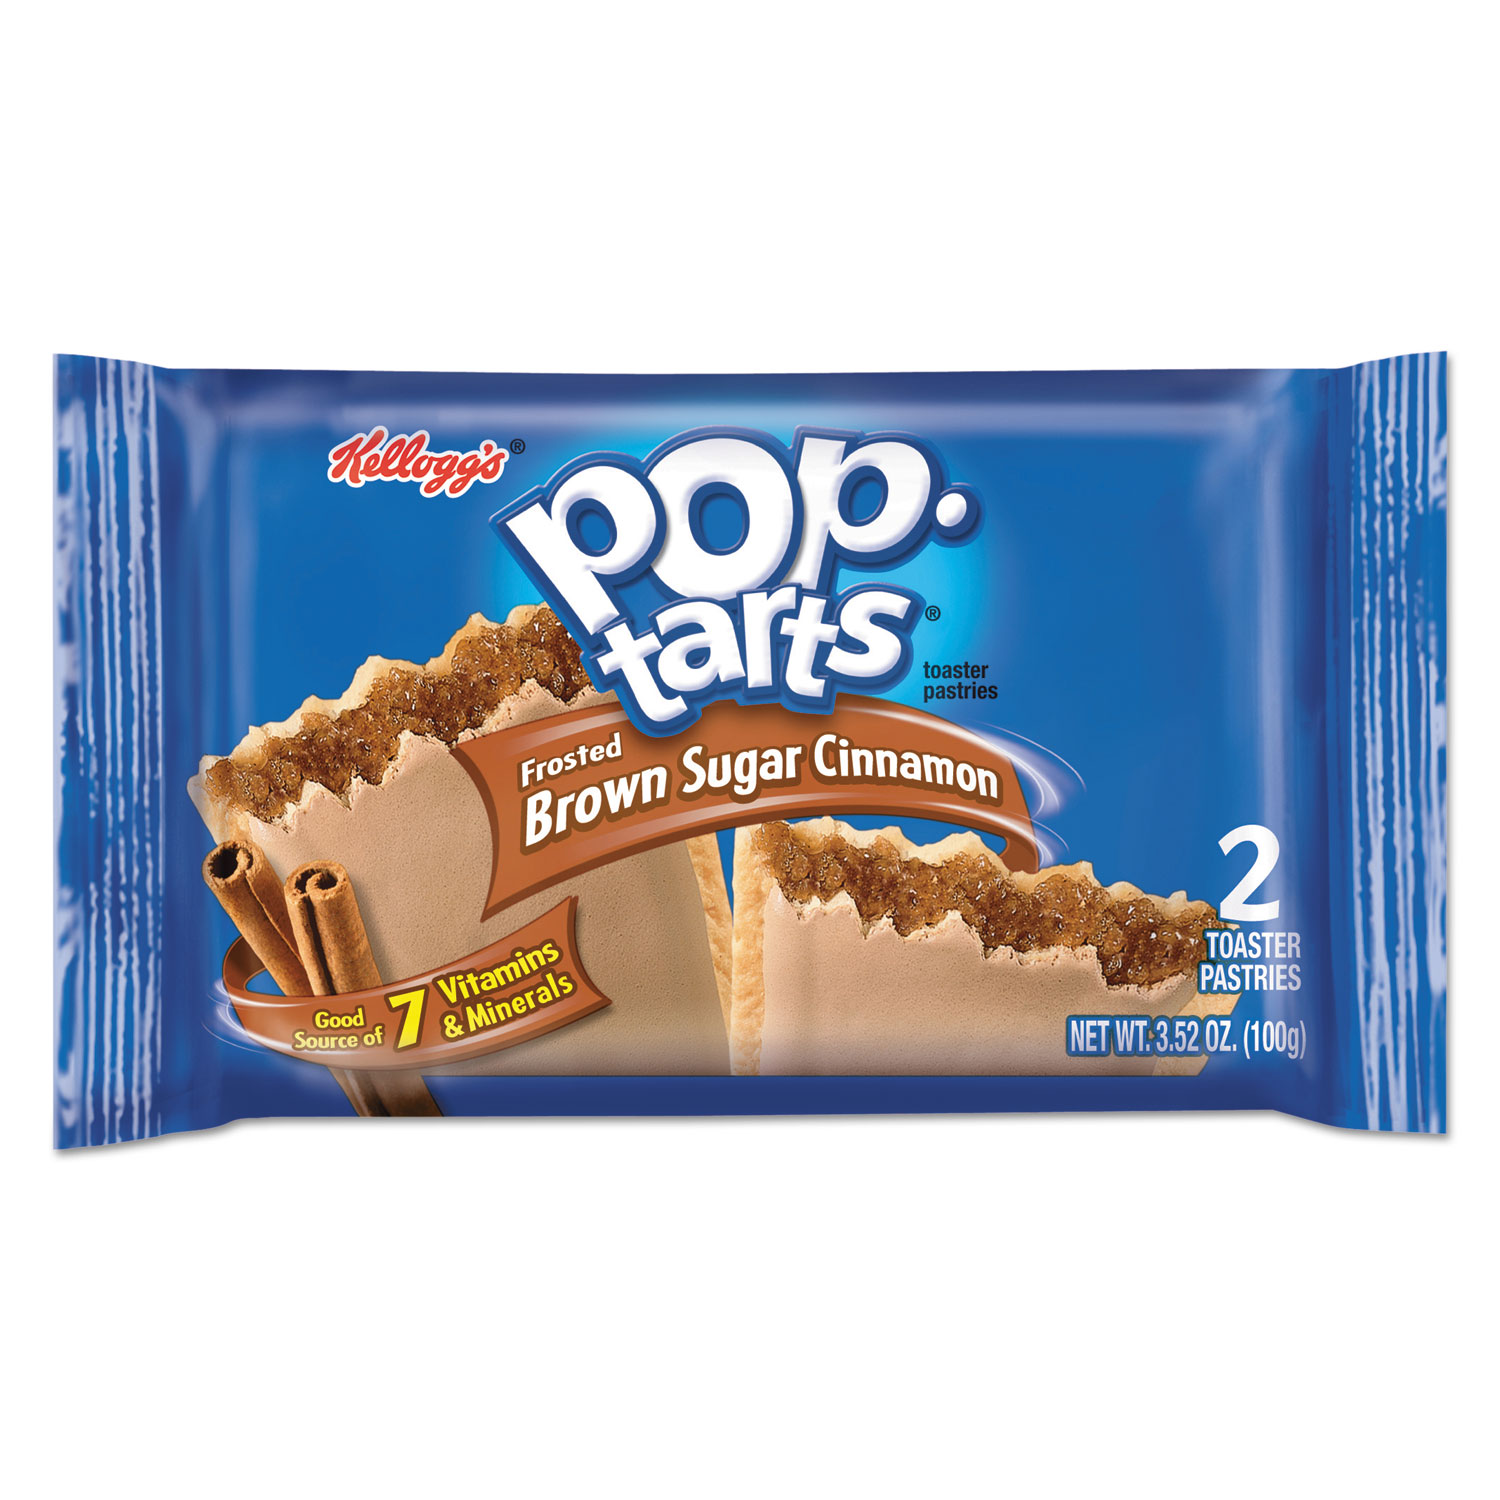  Kellogg's KEL31132 Pop Tarts, Frosted Brown Sugar Cinnamon, 3.52 oz, 2/Pack, 6 Packs/Box (KEB31131) 